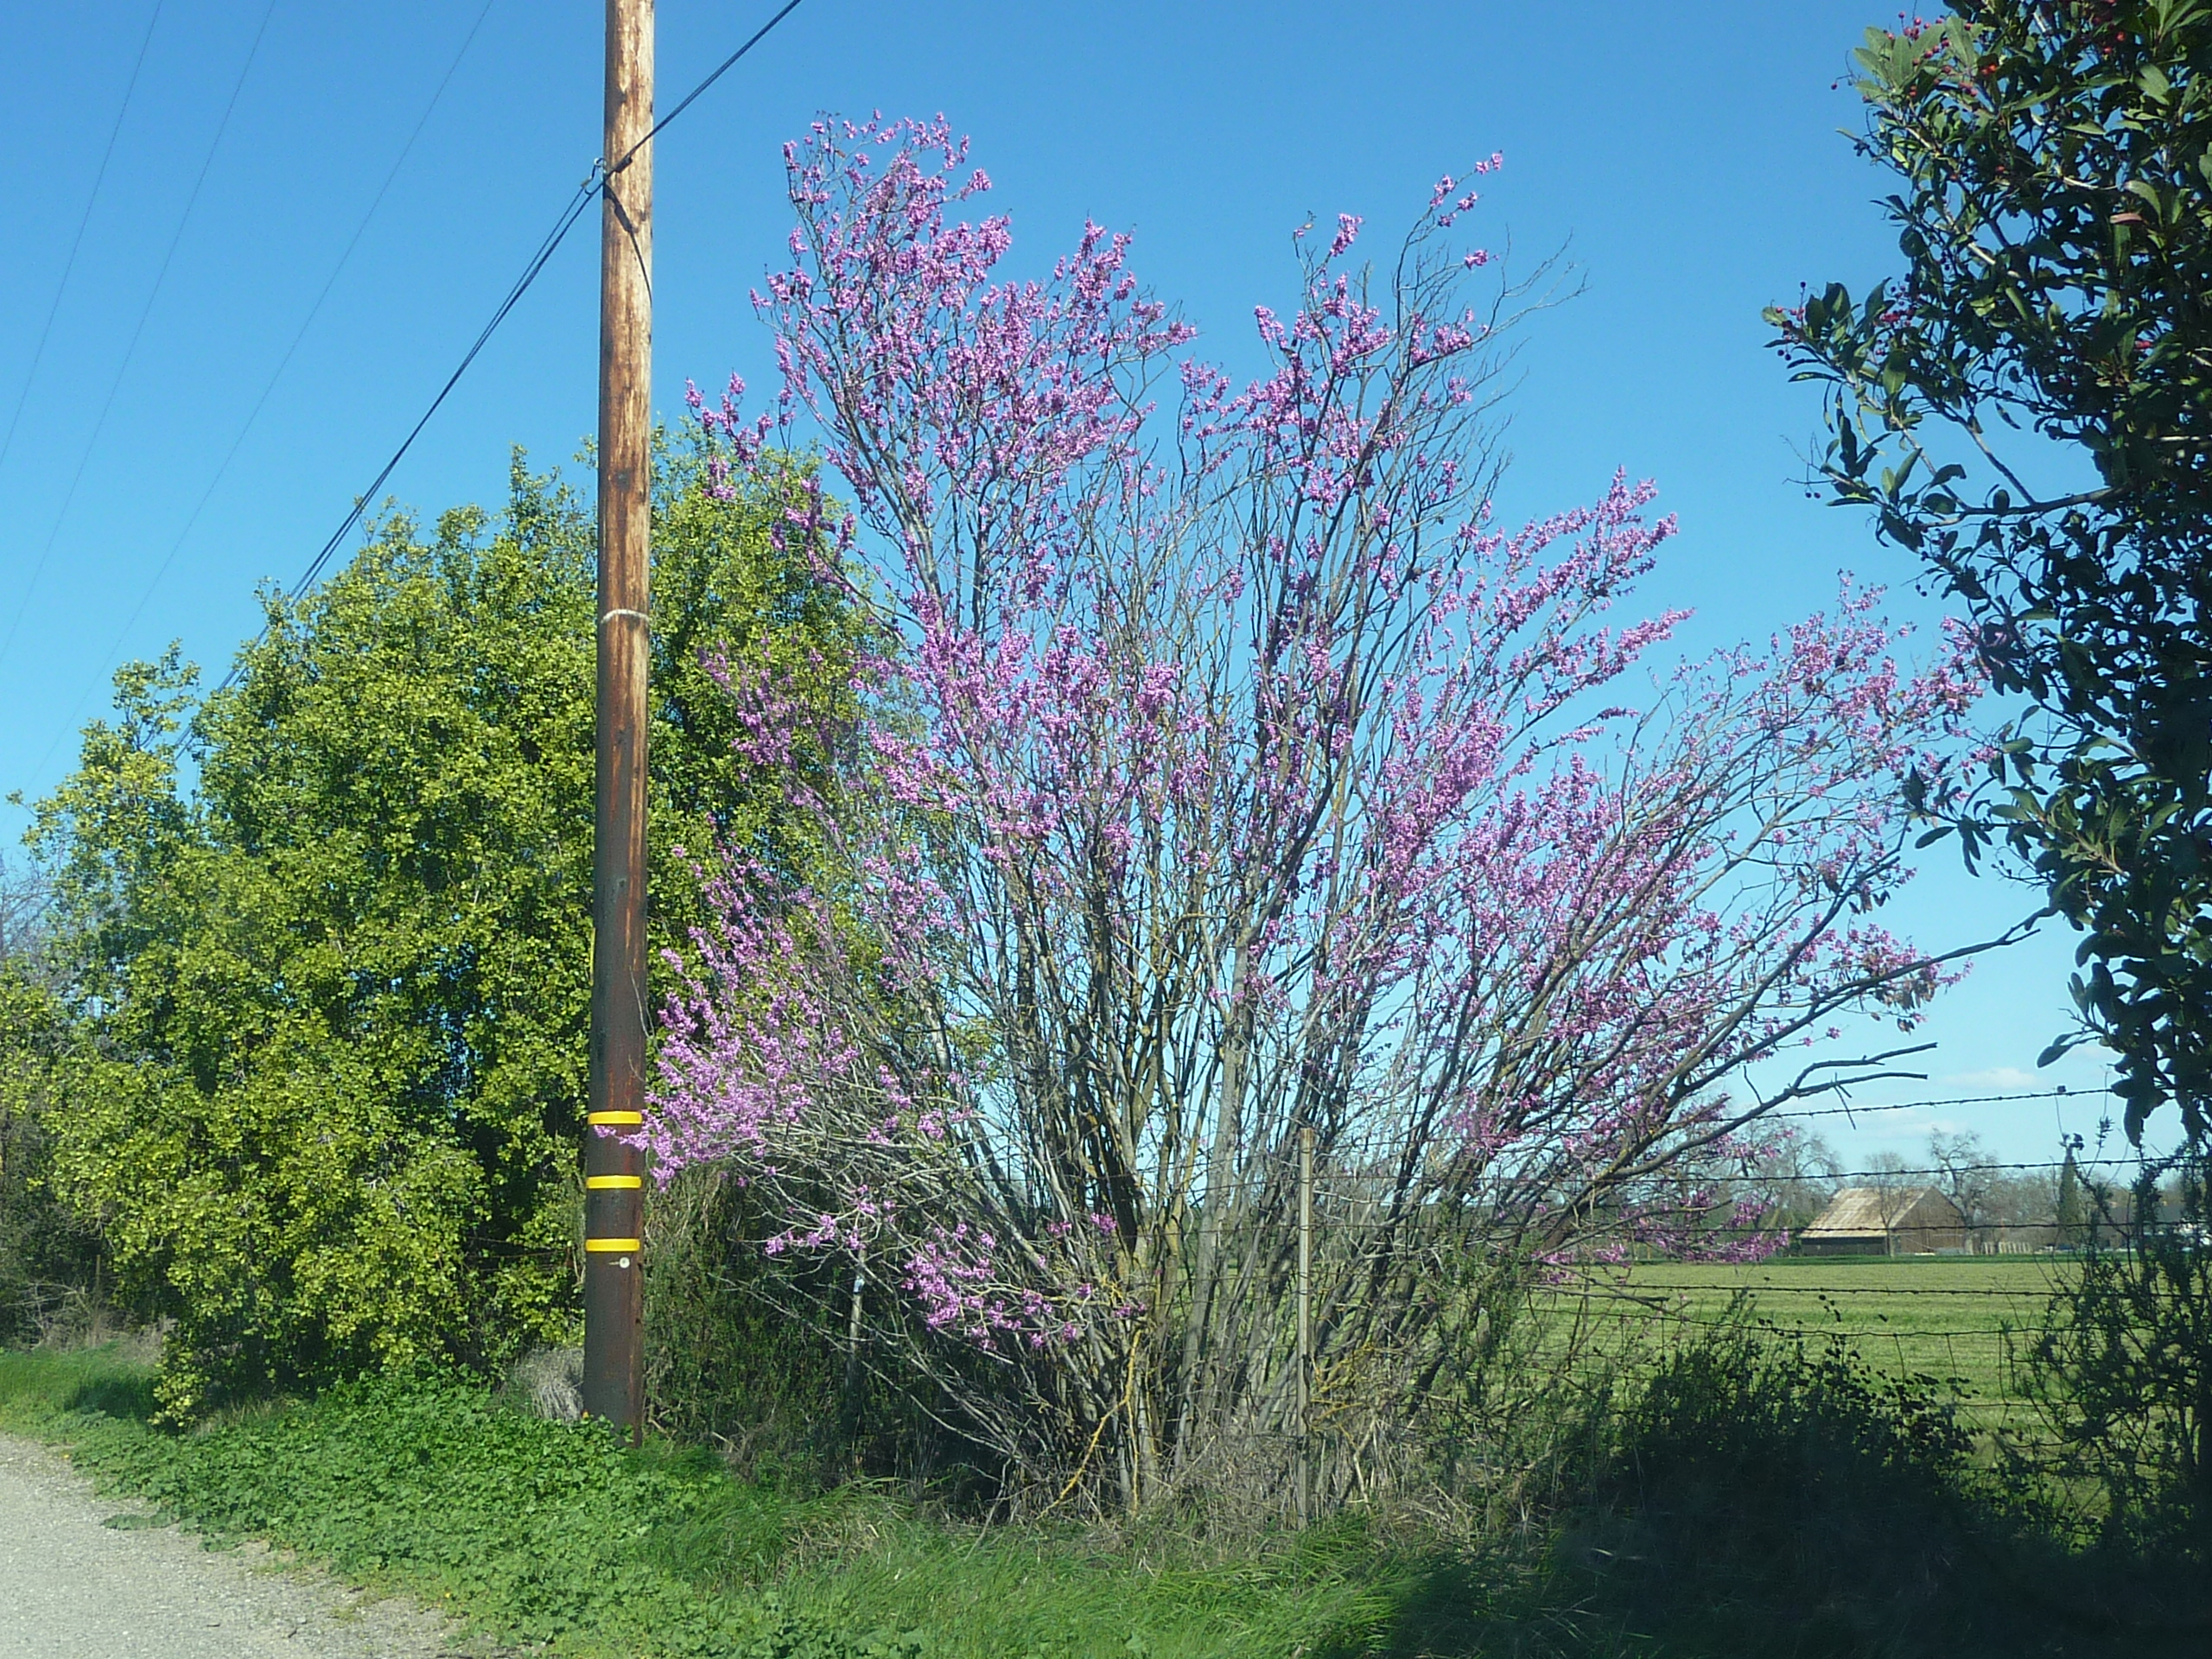 Redbud in bloom in early spring